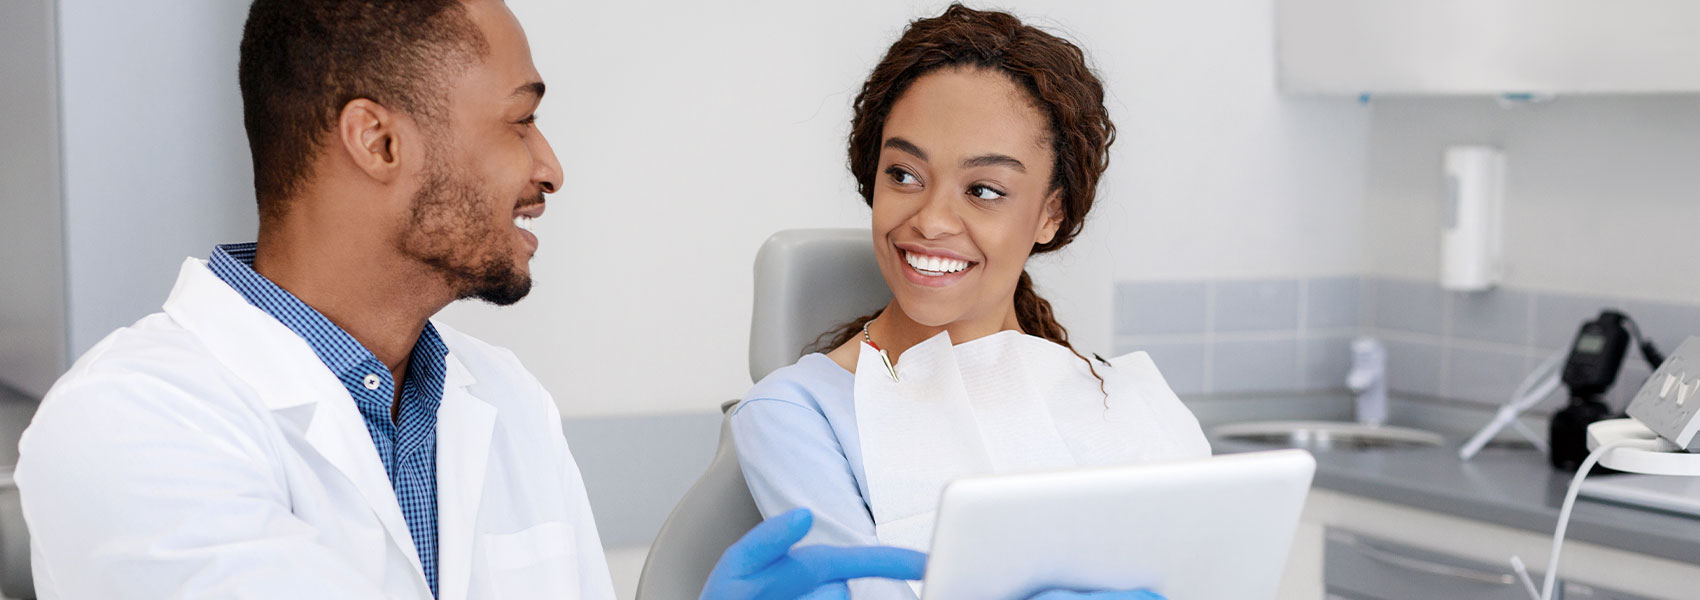 Dentist explain to patient about the status